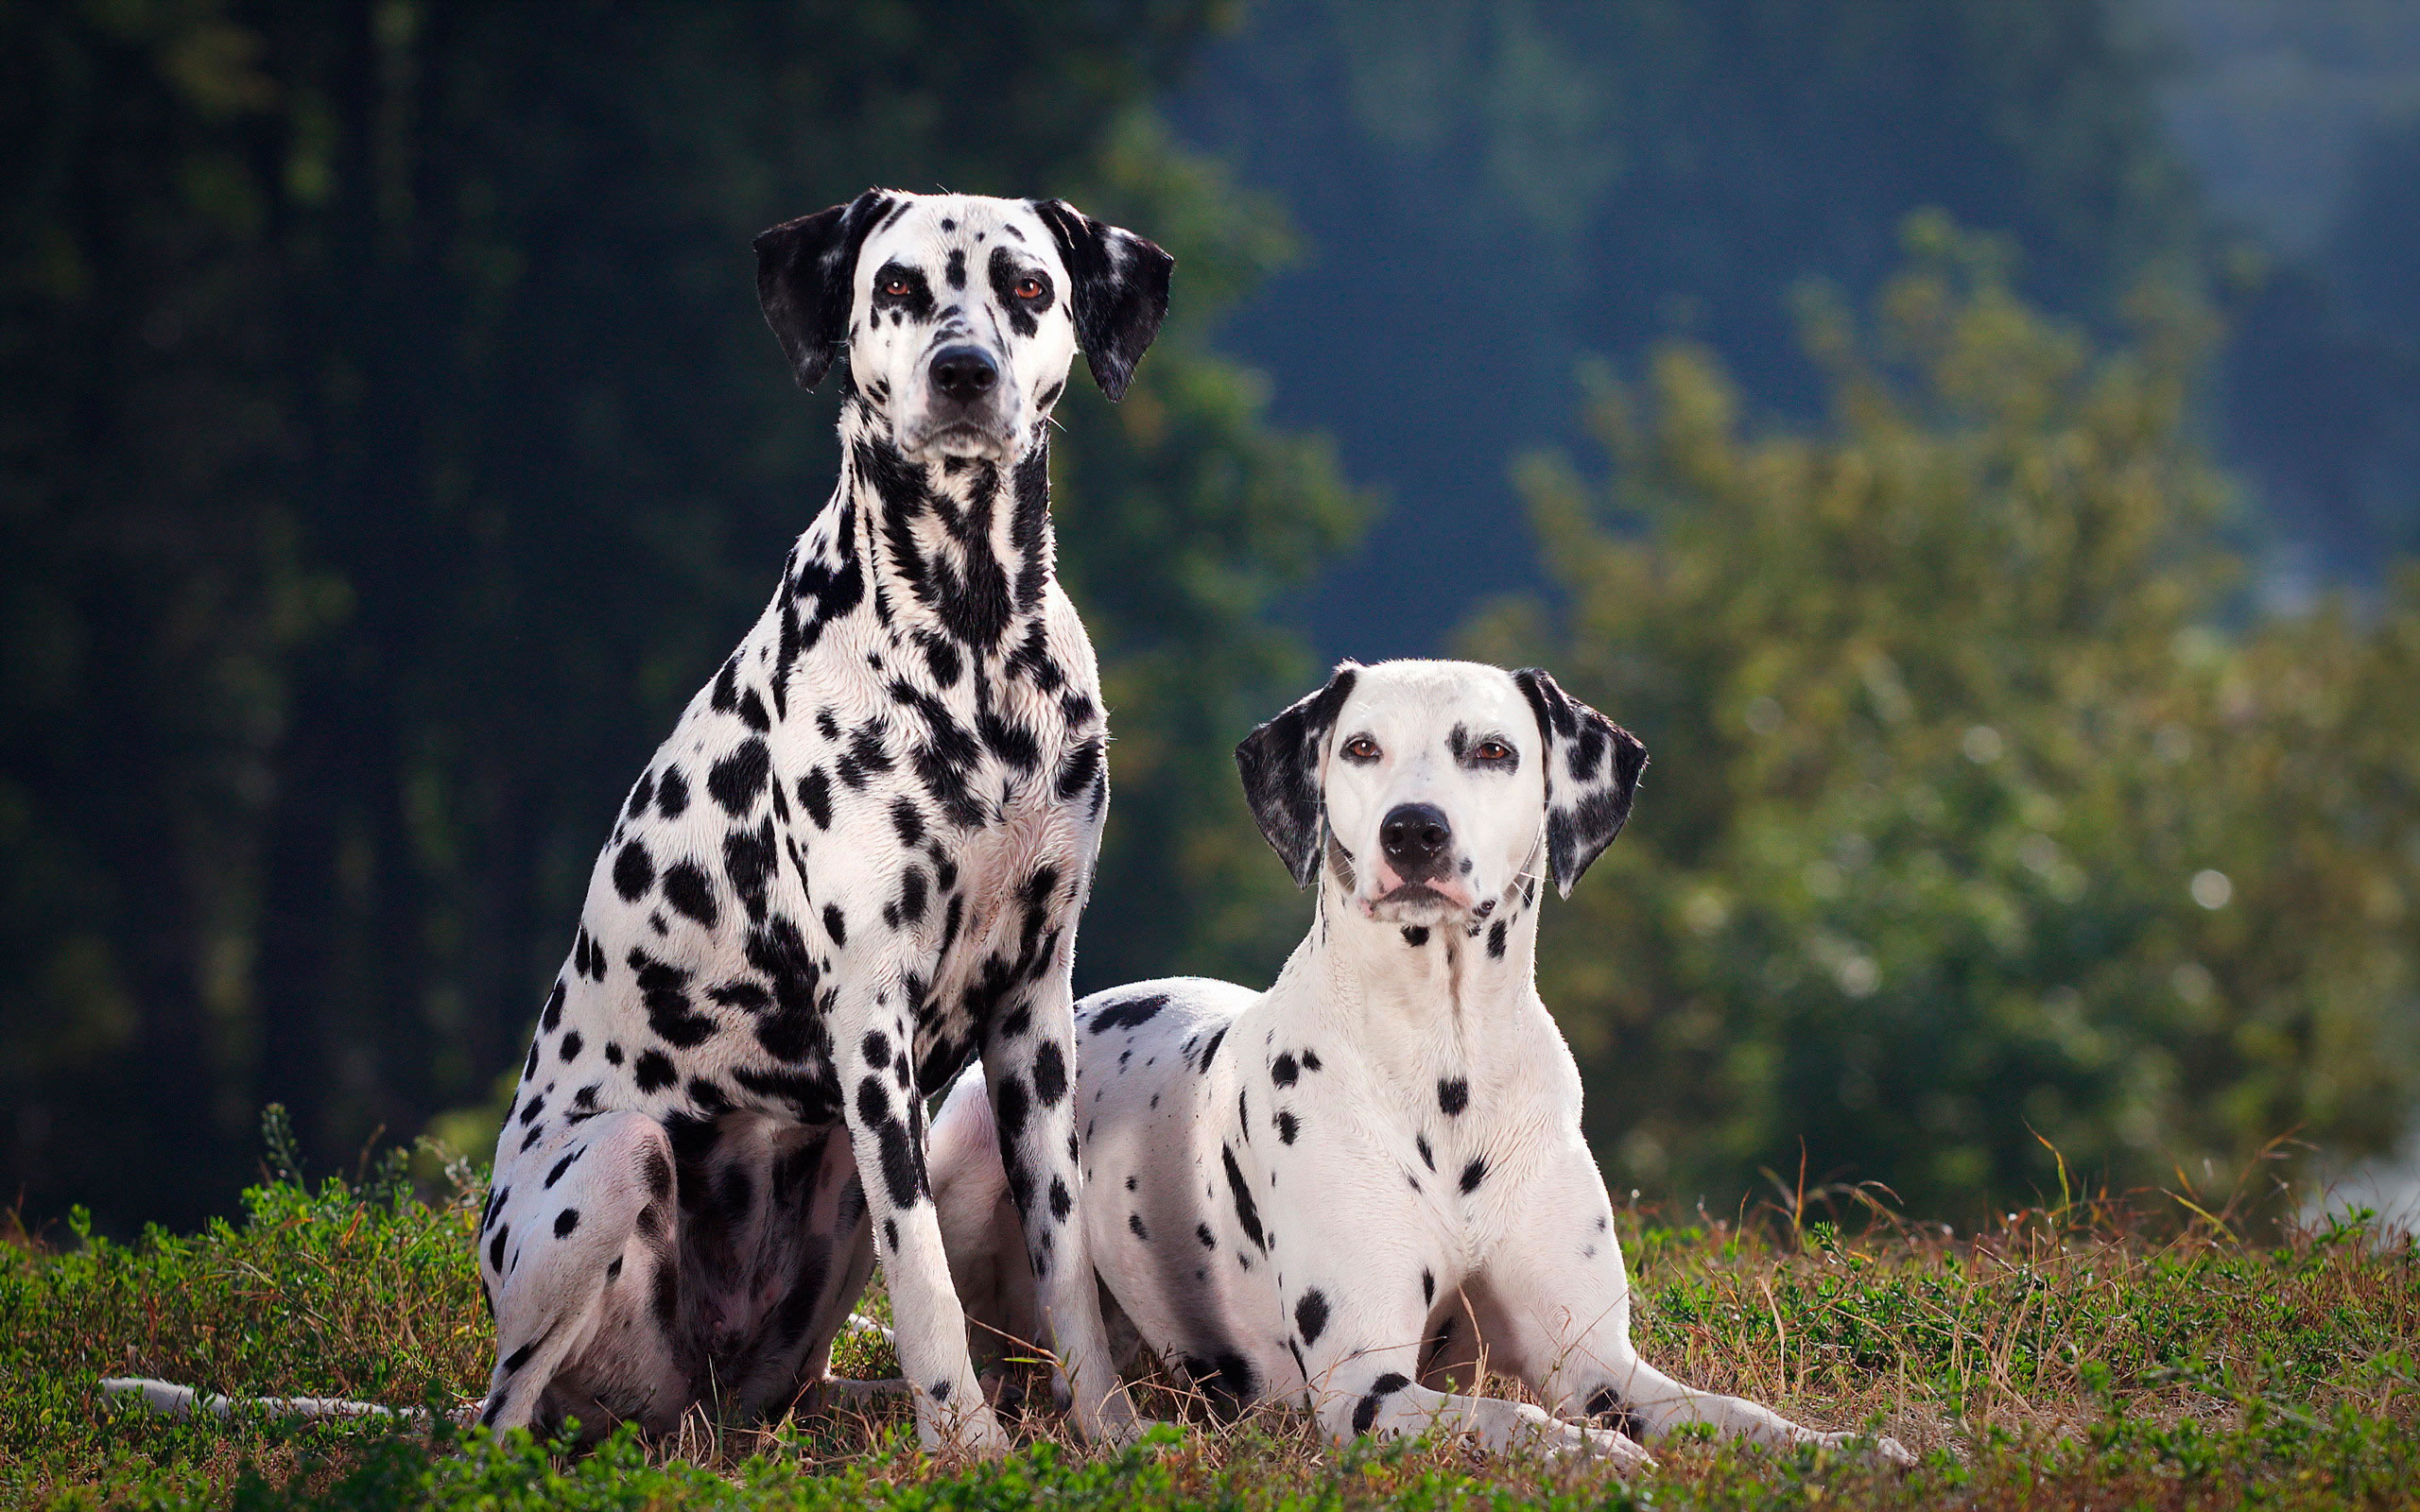 Dalmatian - My Doggy Rocks